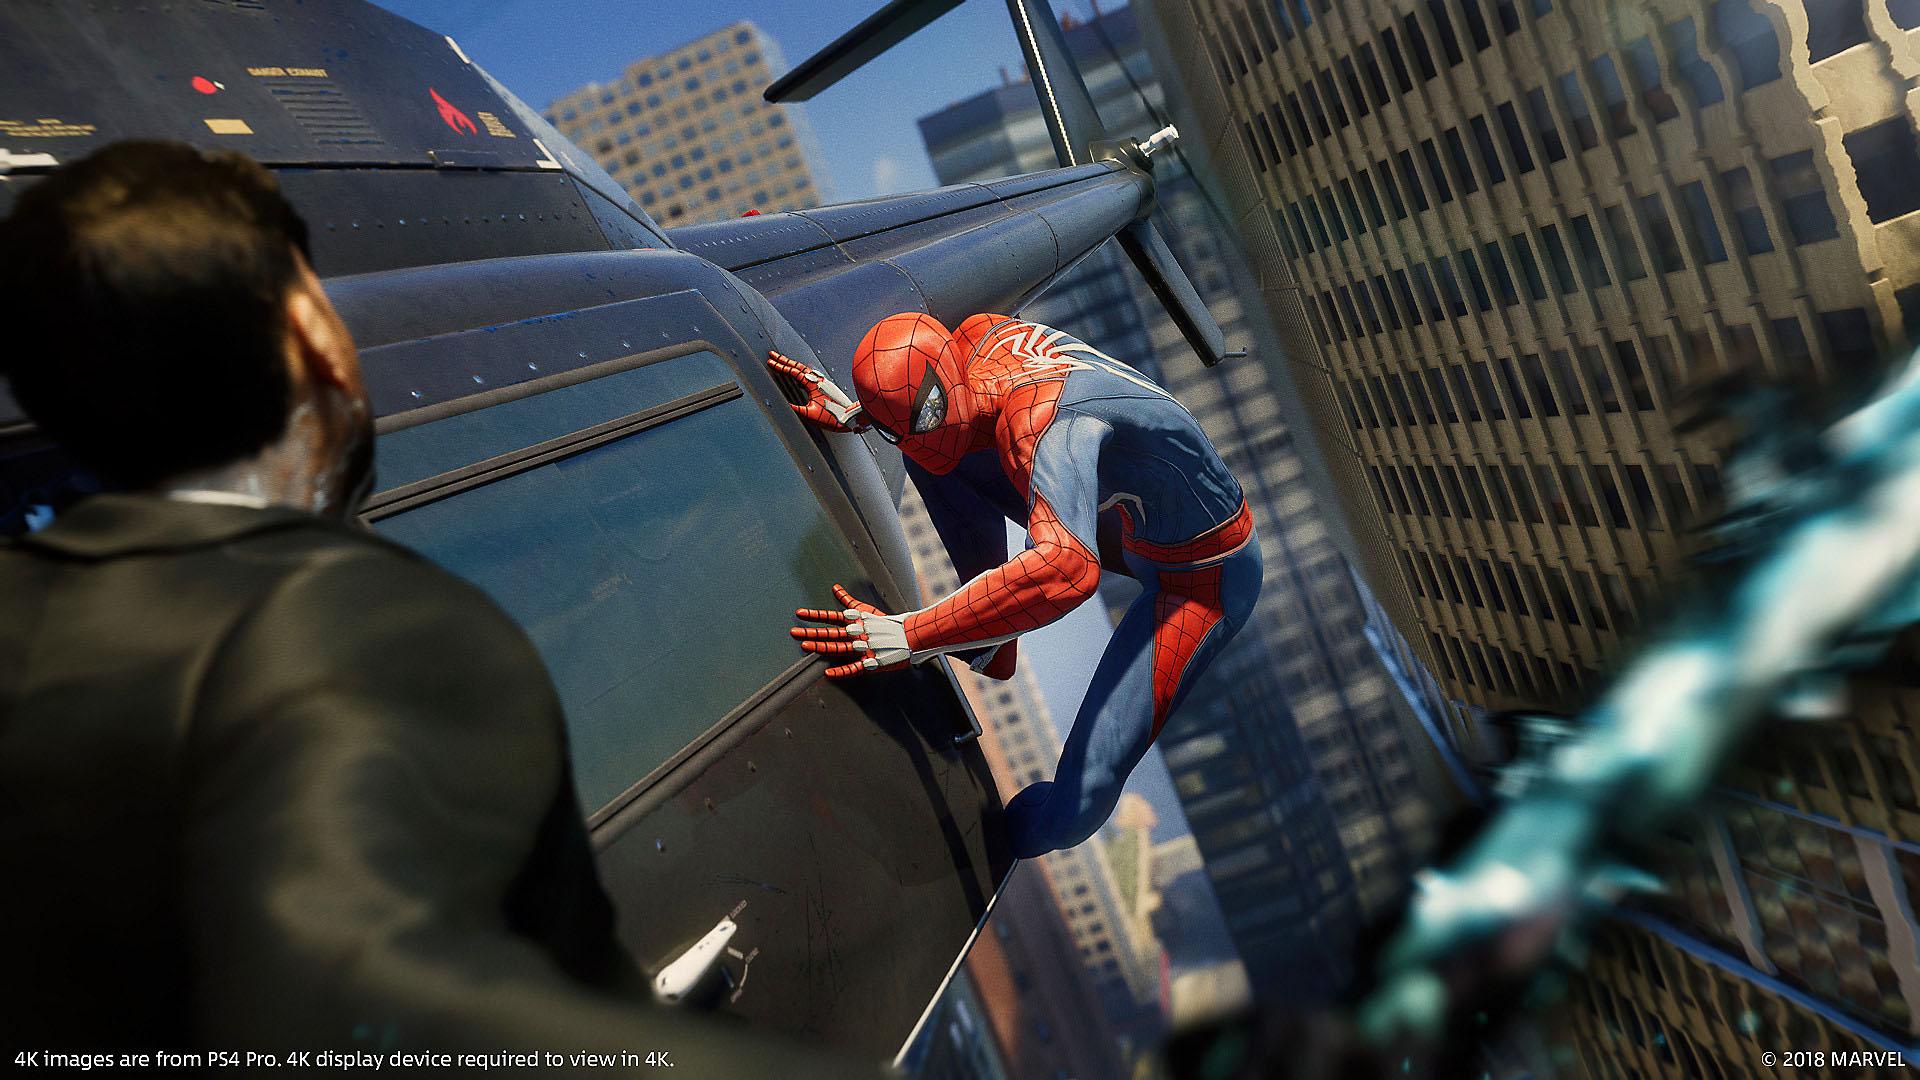 Marvel'n Yeni Spider-Man Oyunu lk  Gnde 3.3 Milyon Adet Satt